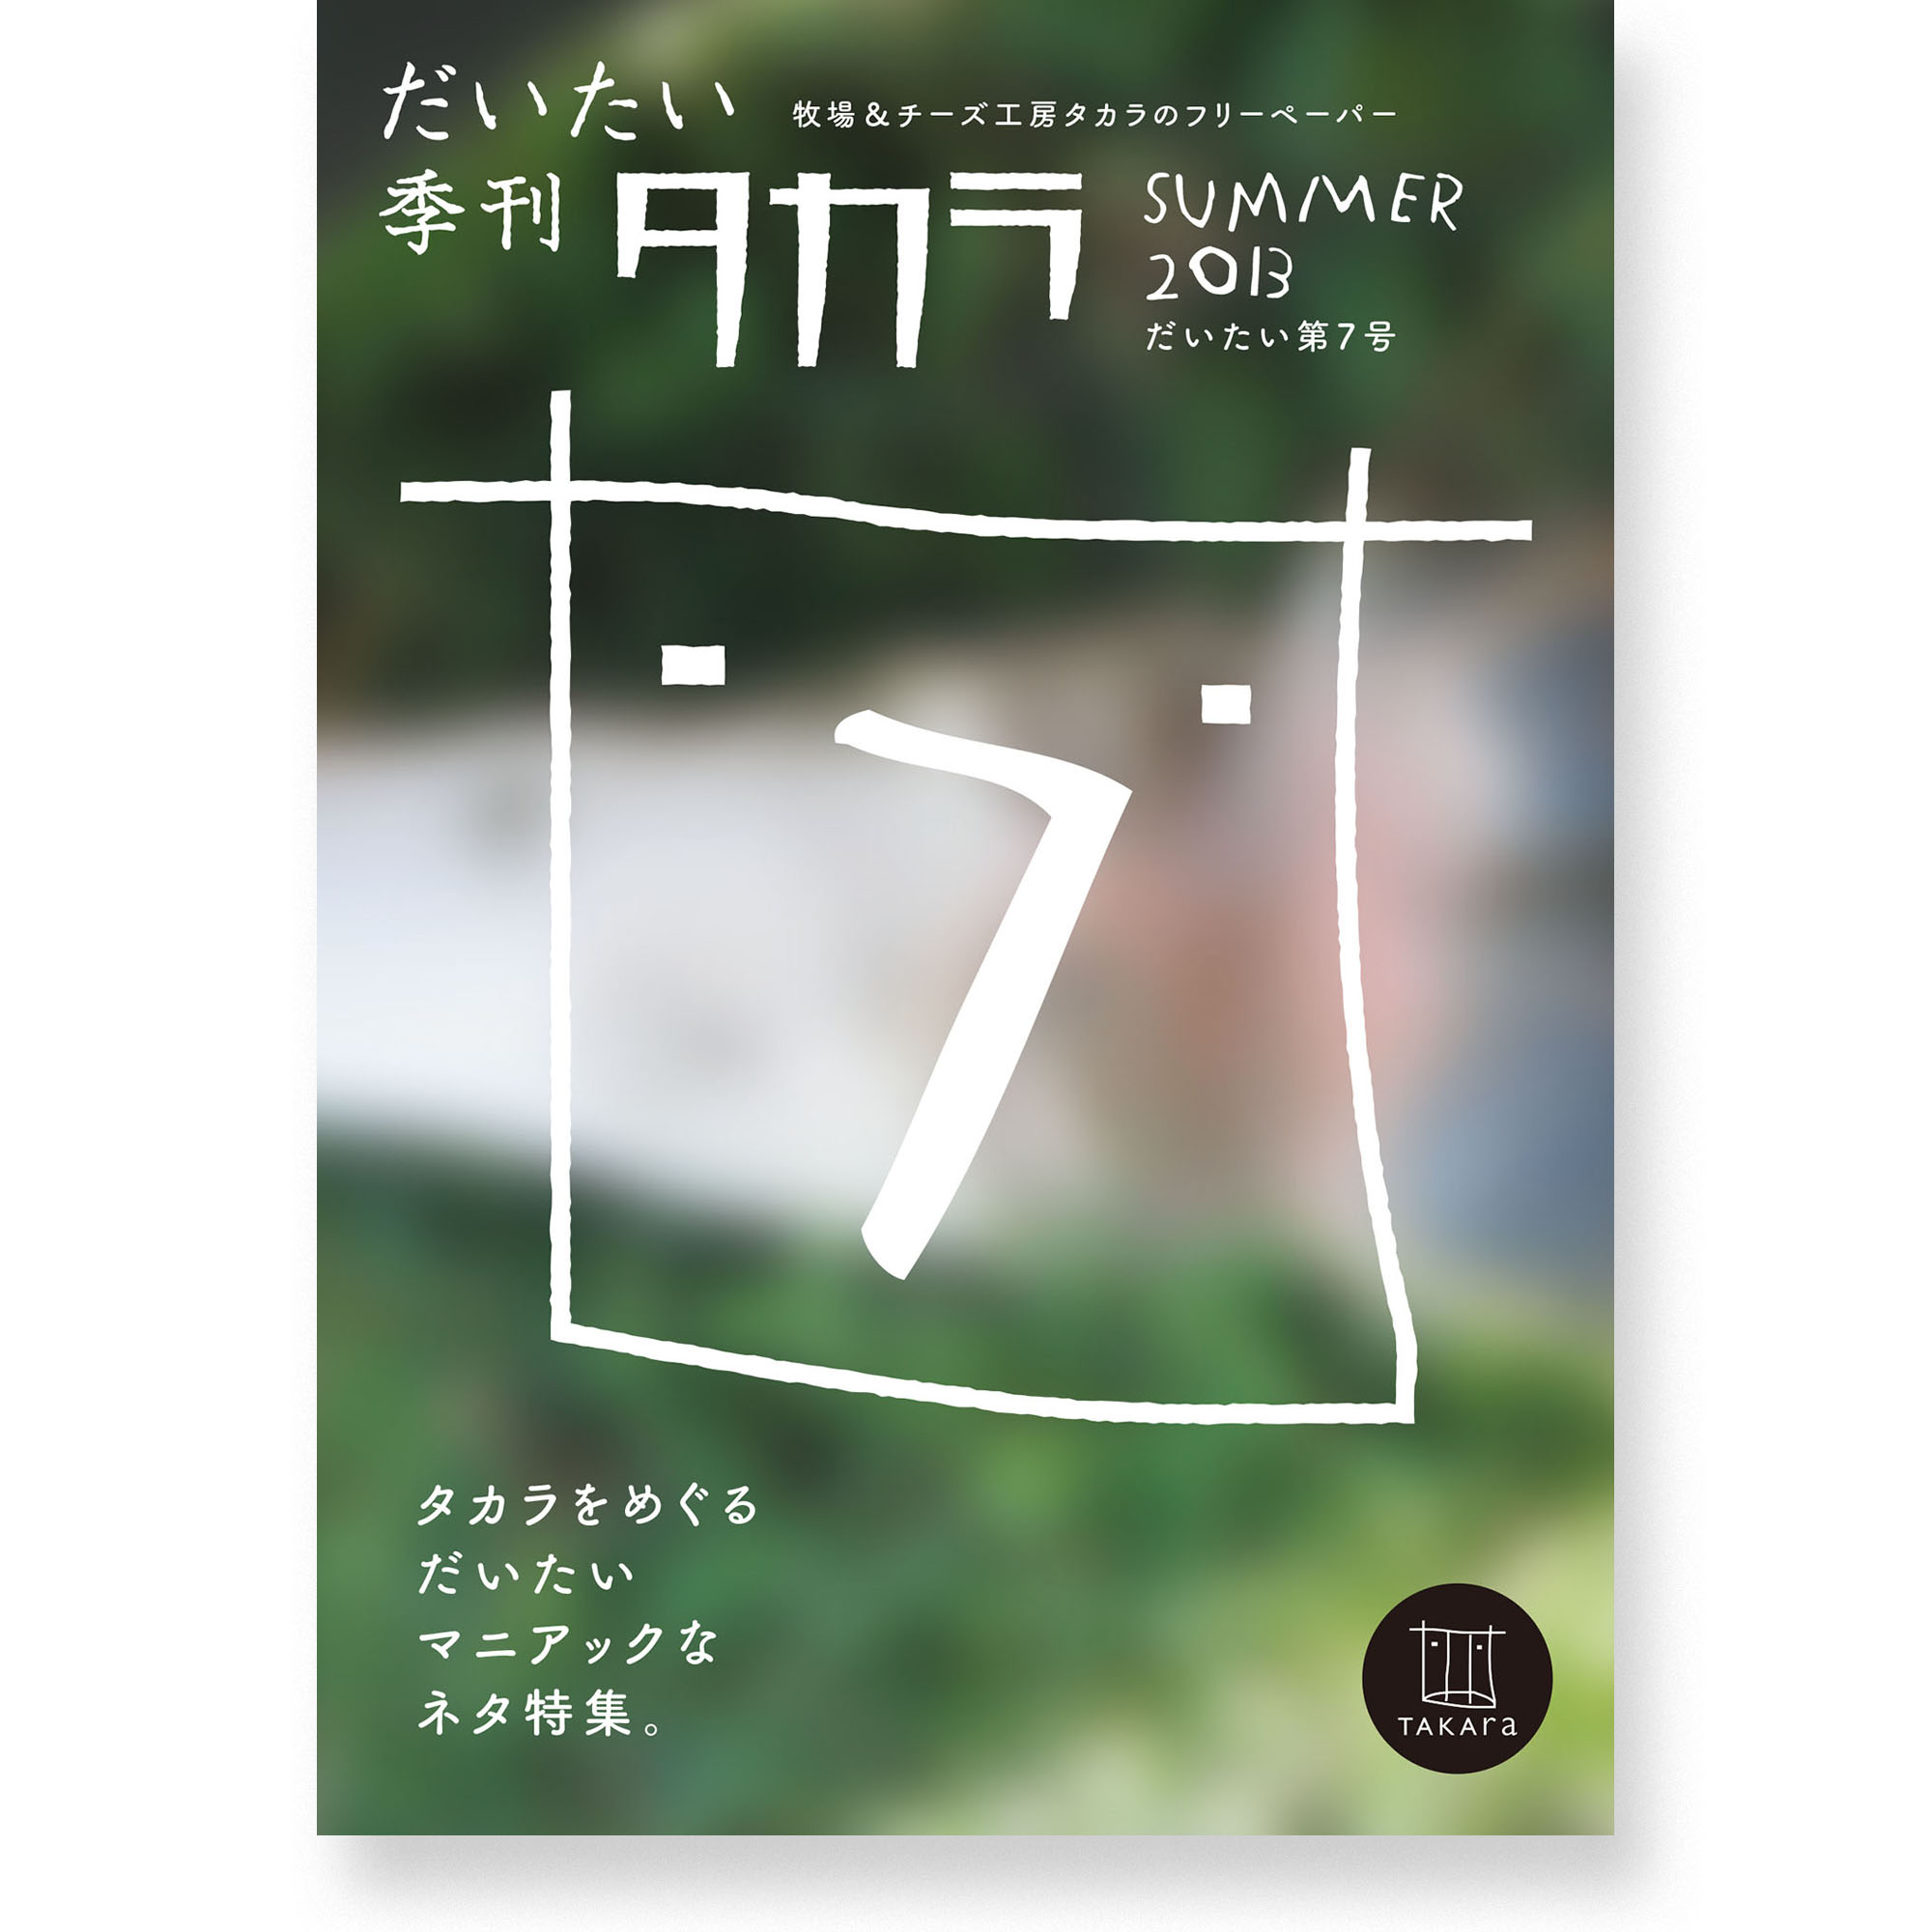 Daitai Quarterly Takara Vol.7